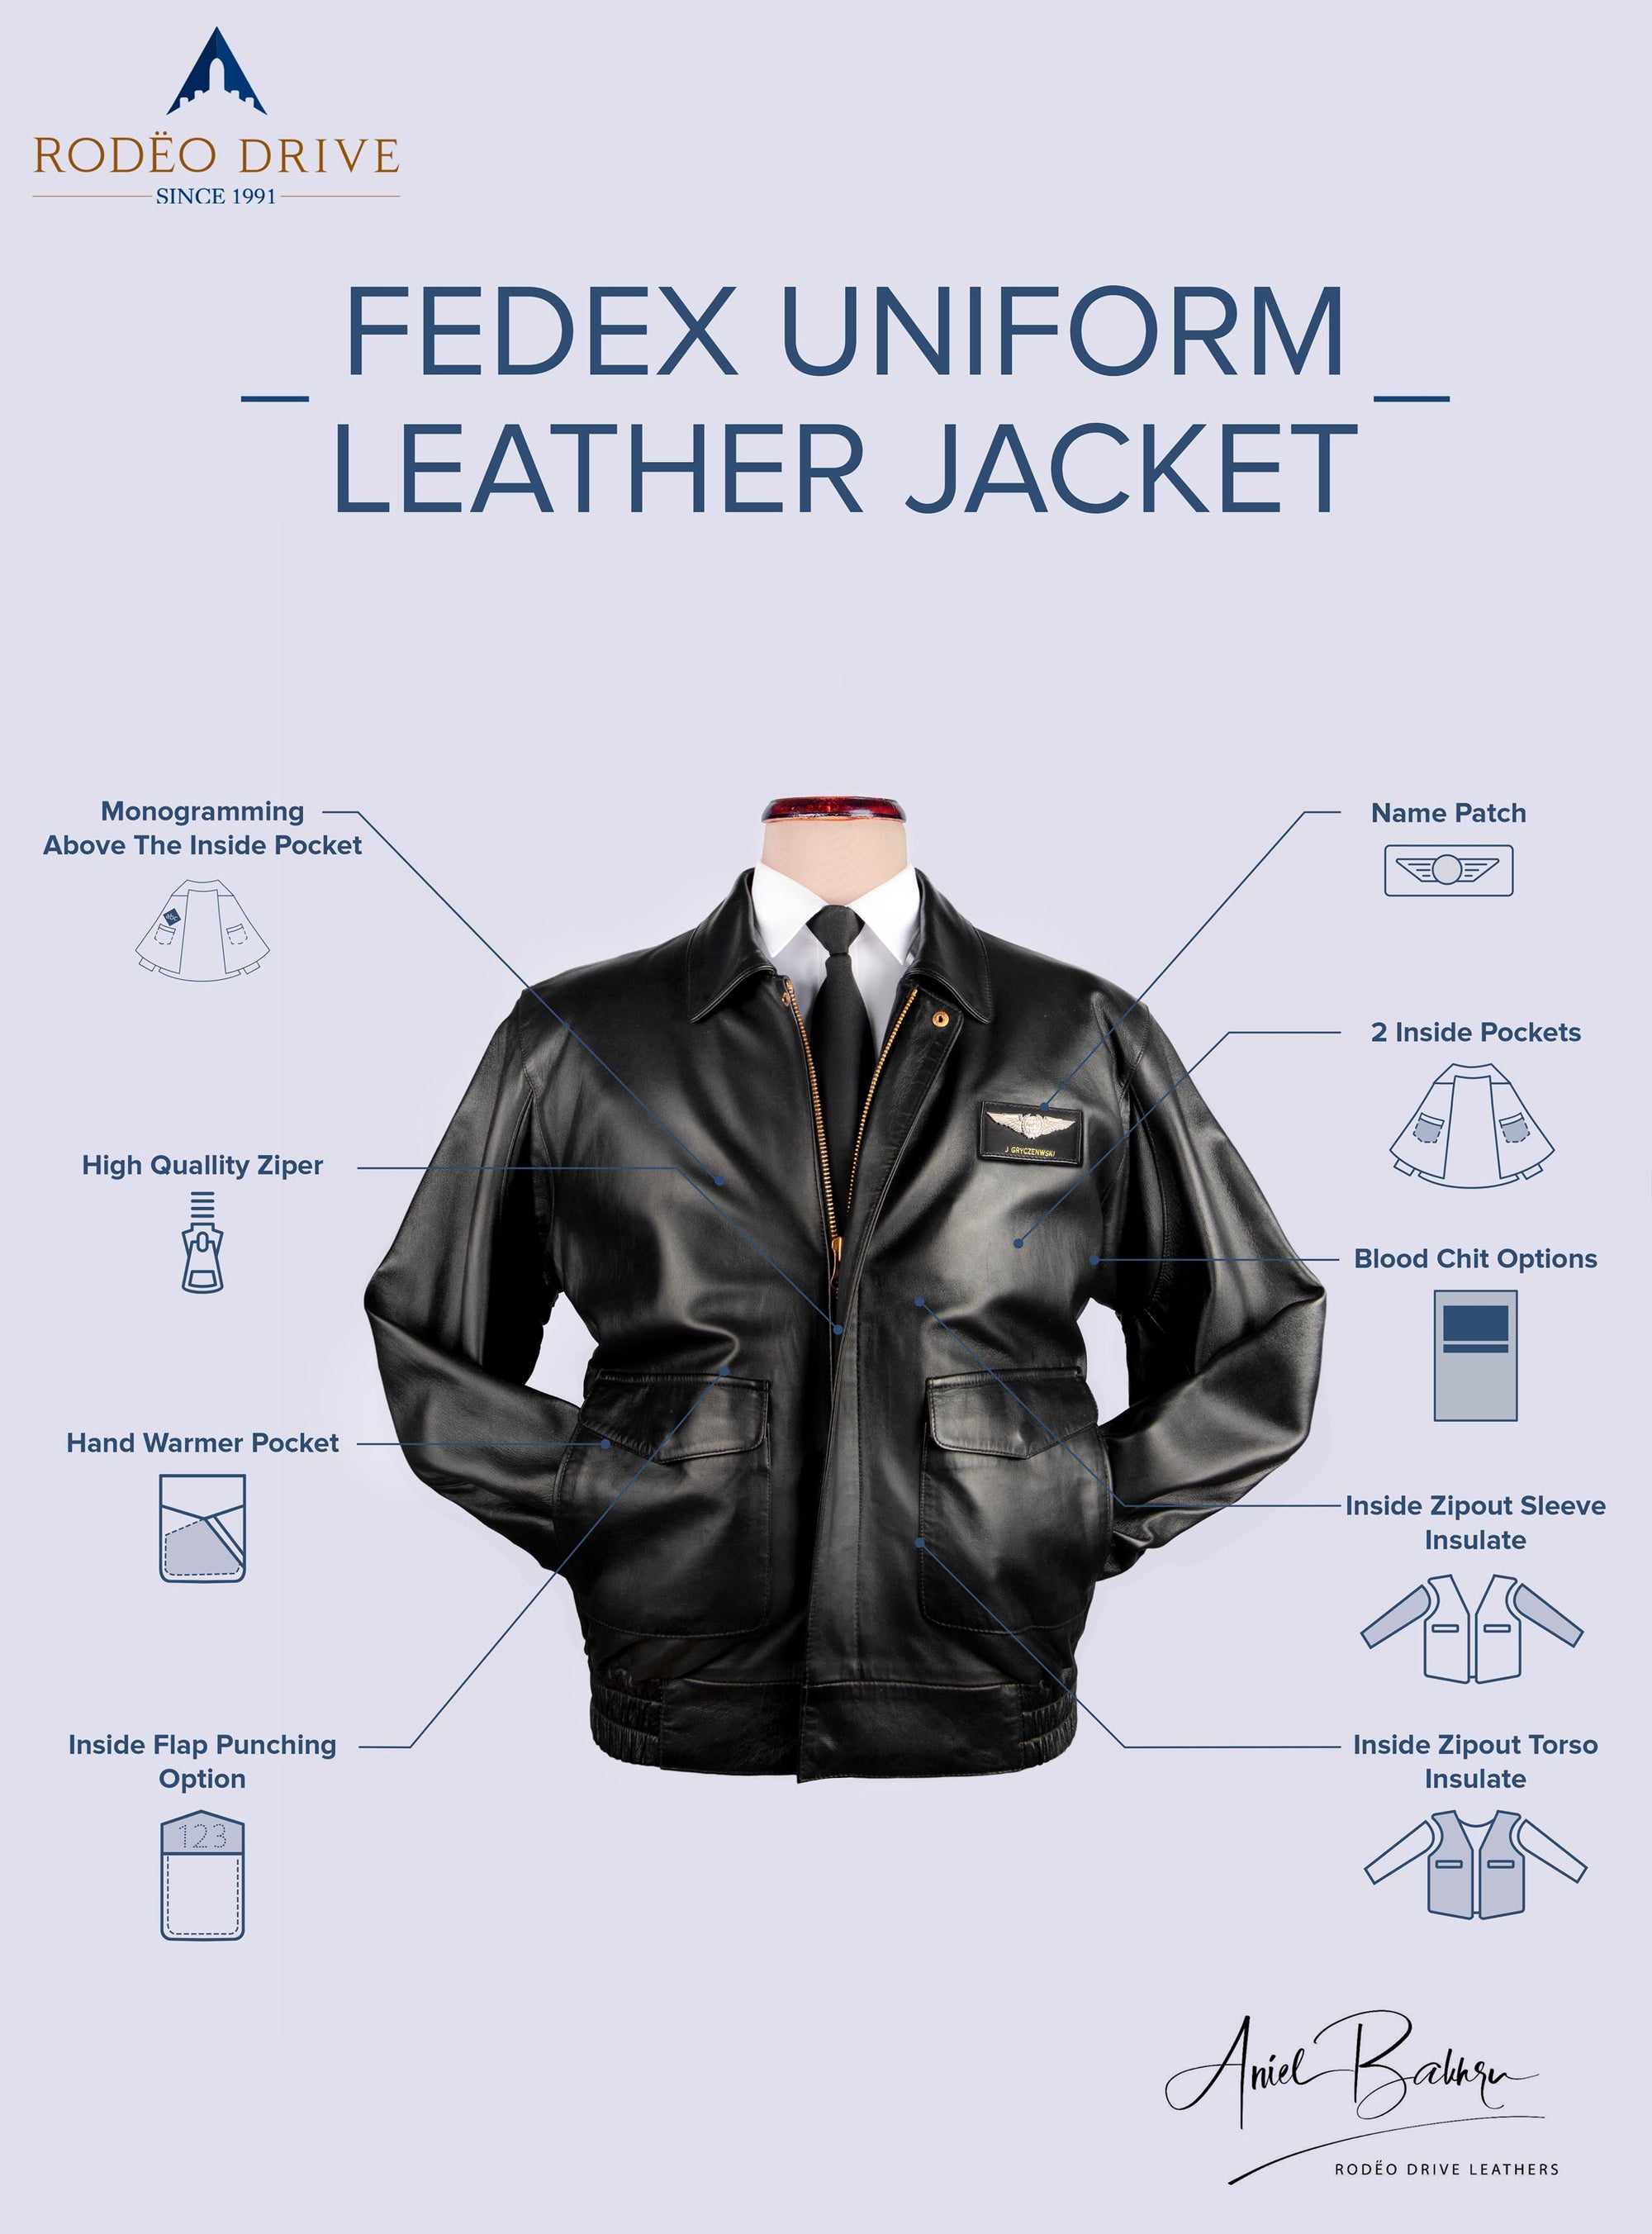 Complete anatomy of FedEx UNIFORM LEATHER JACKETS MEN